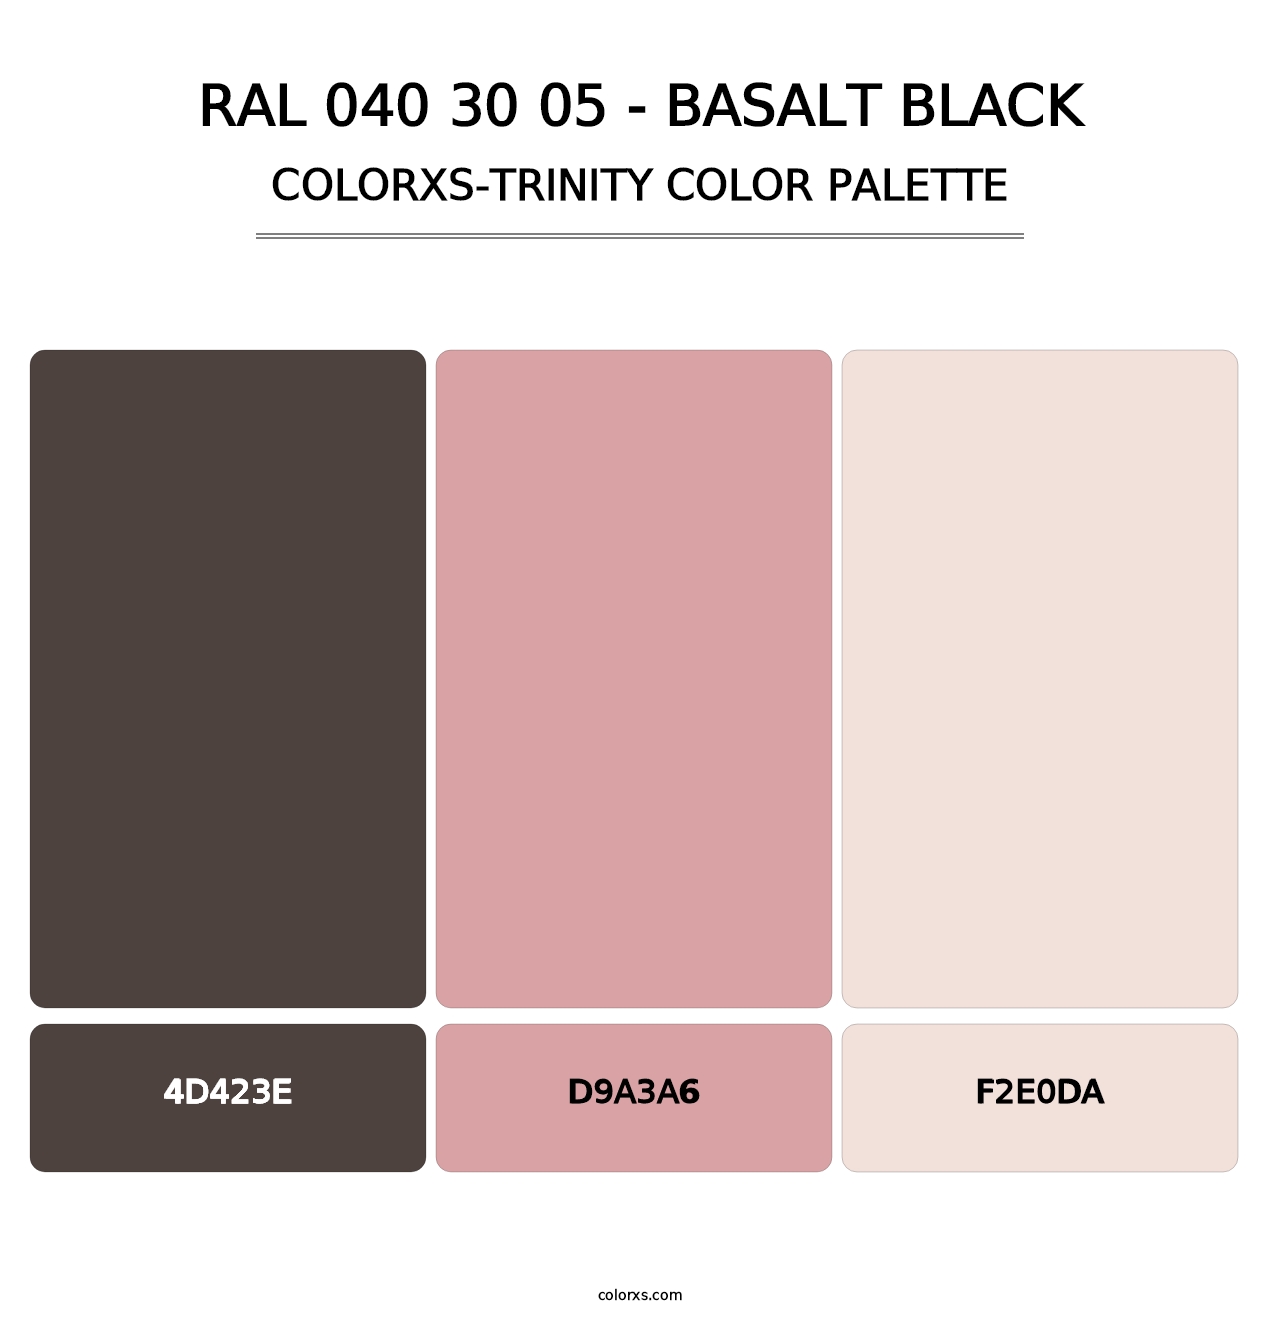 RAL 040 30 05 - Basalt Black - Colorxs Trinity Palette